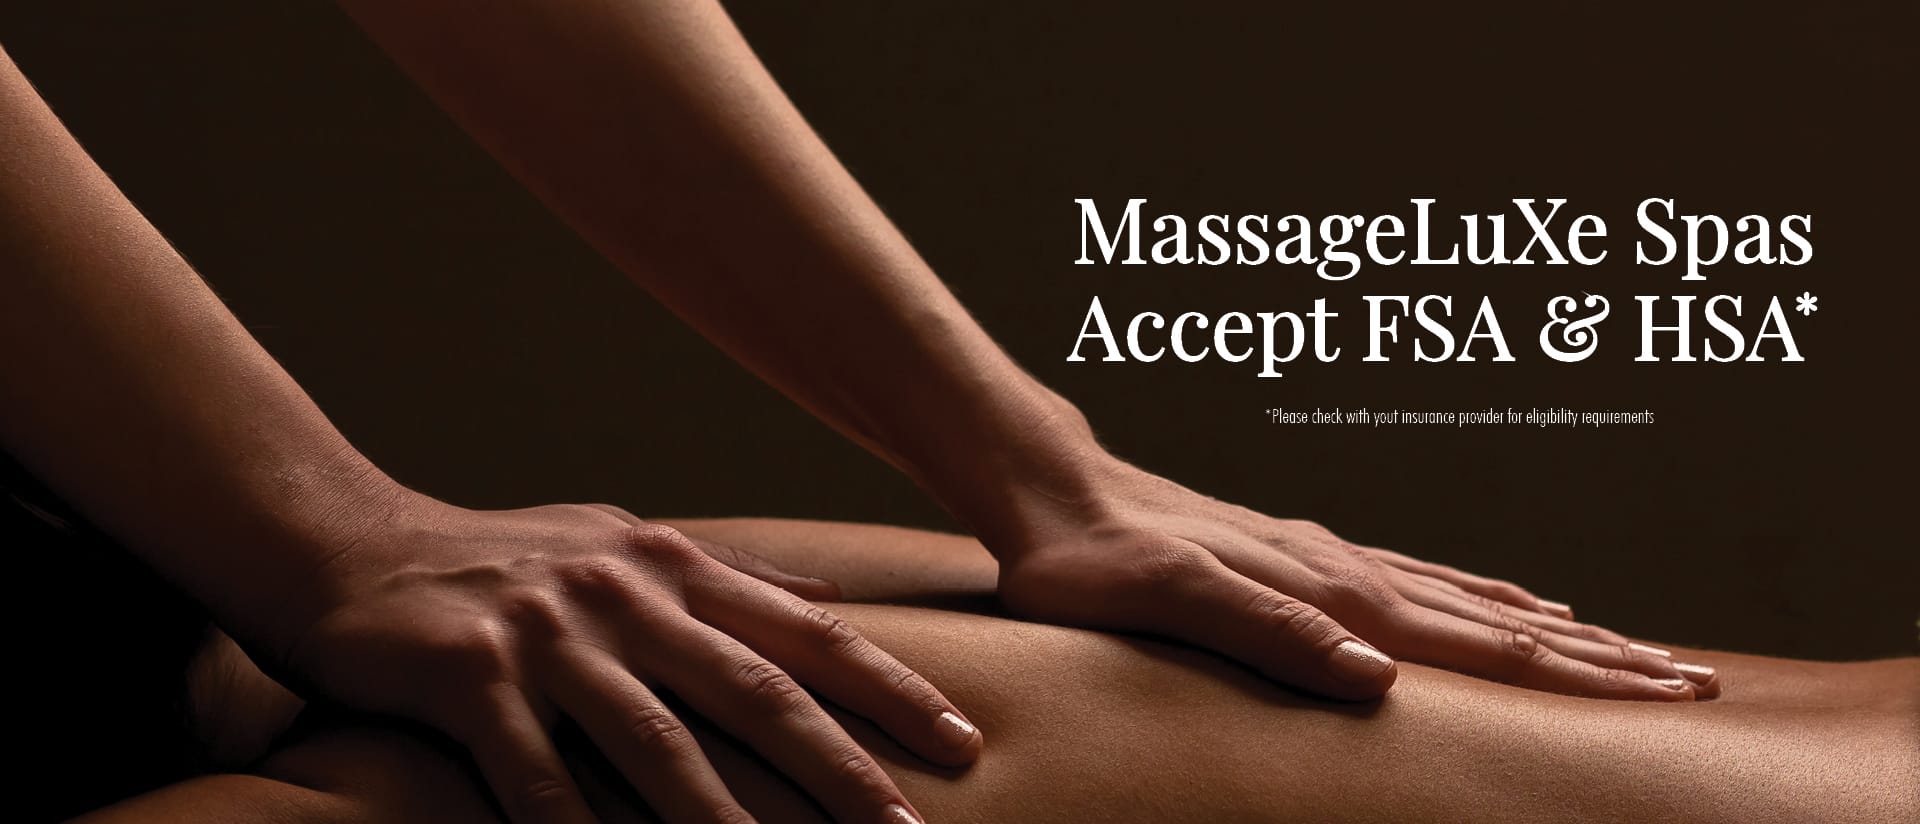 Massage & Day Spa | MassageLuXe